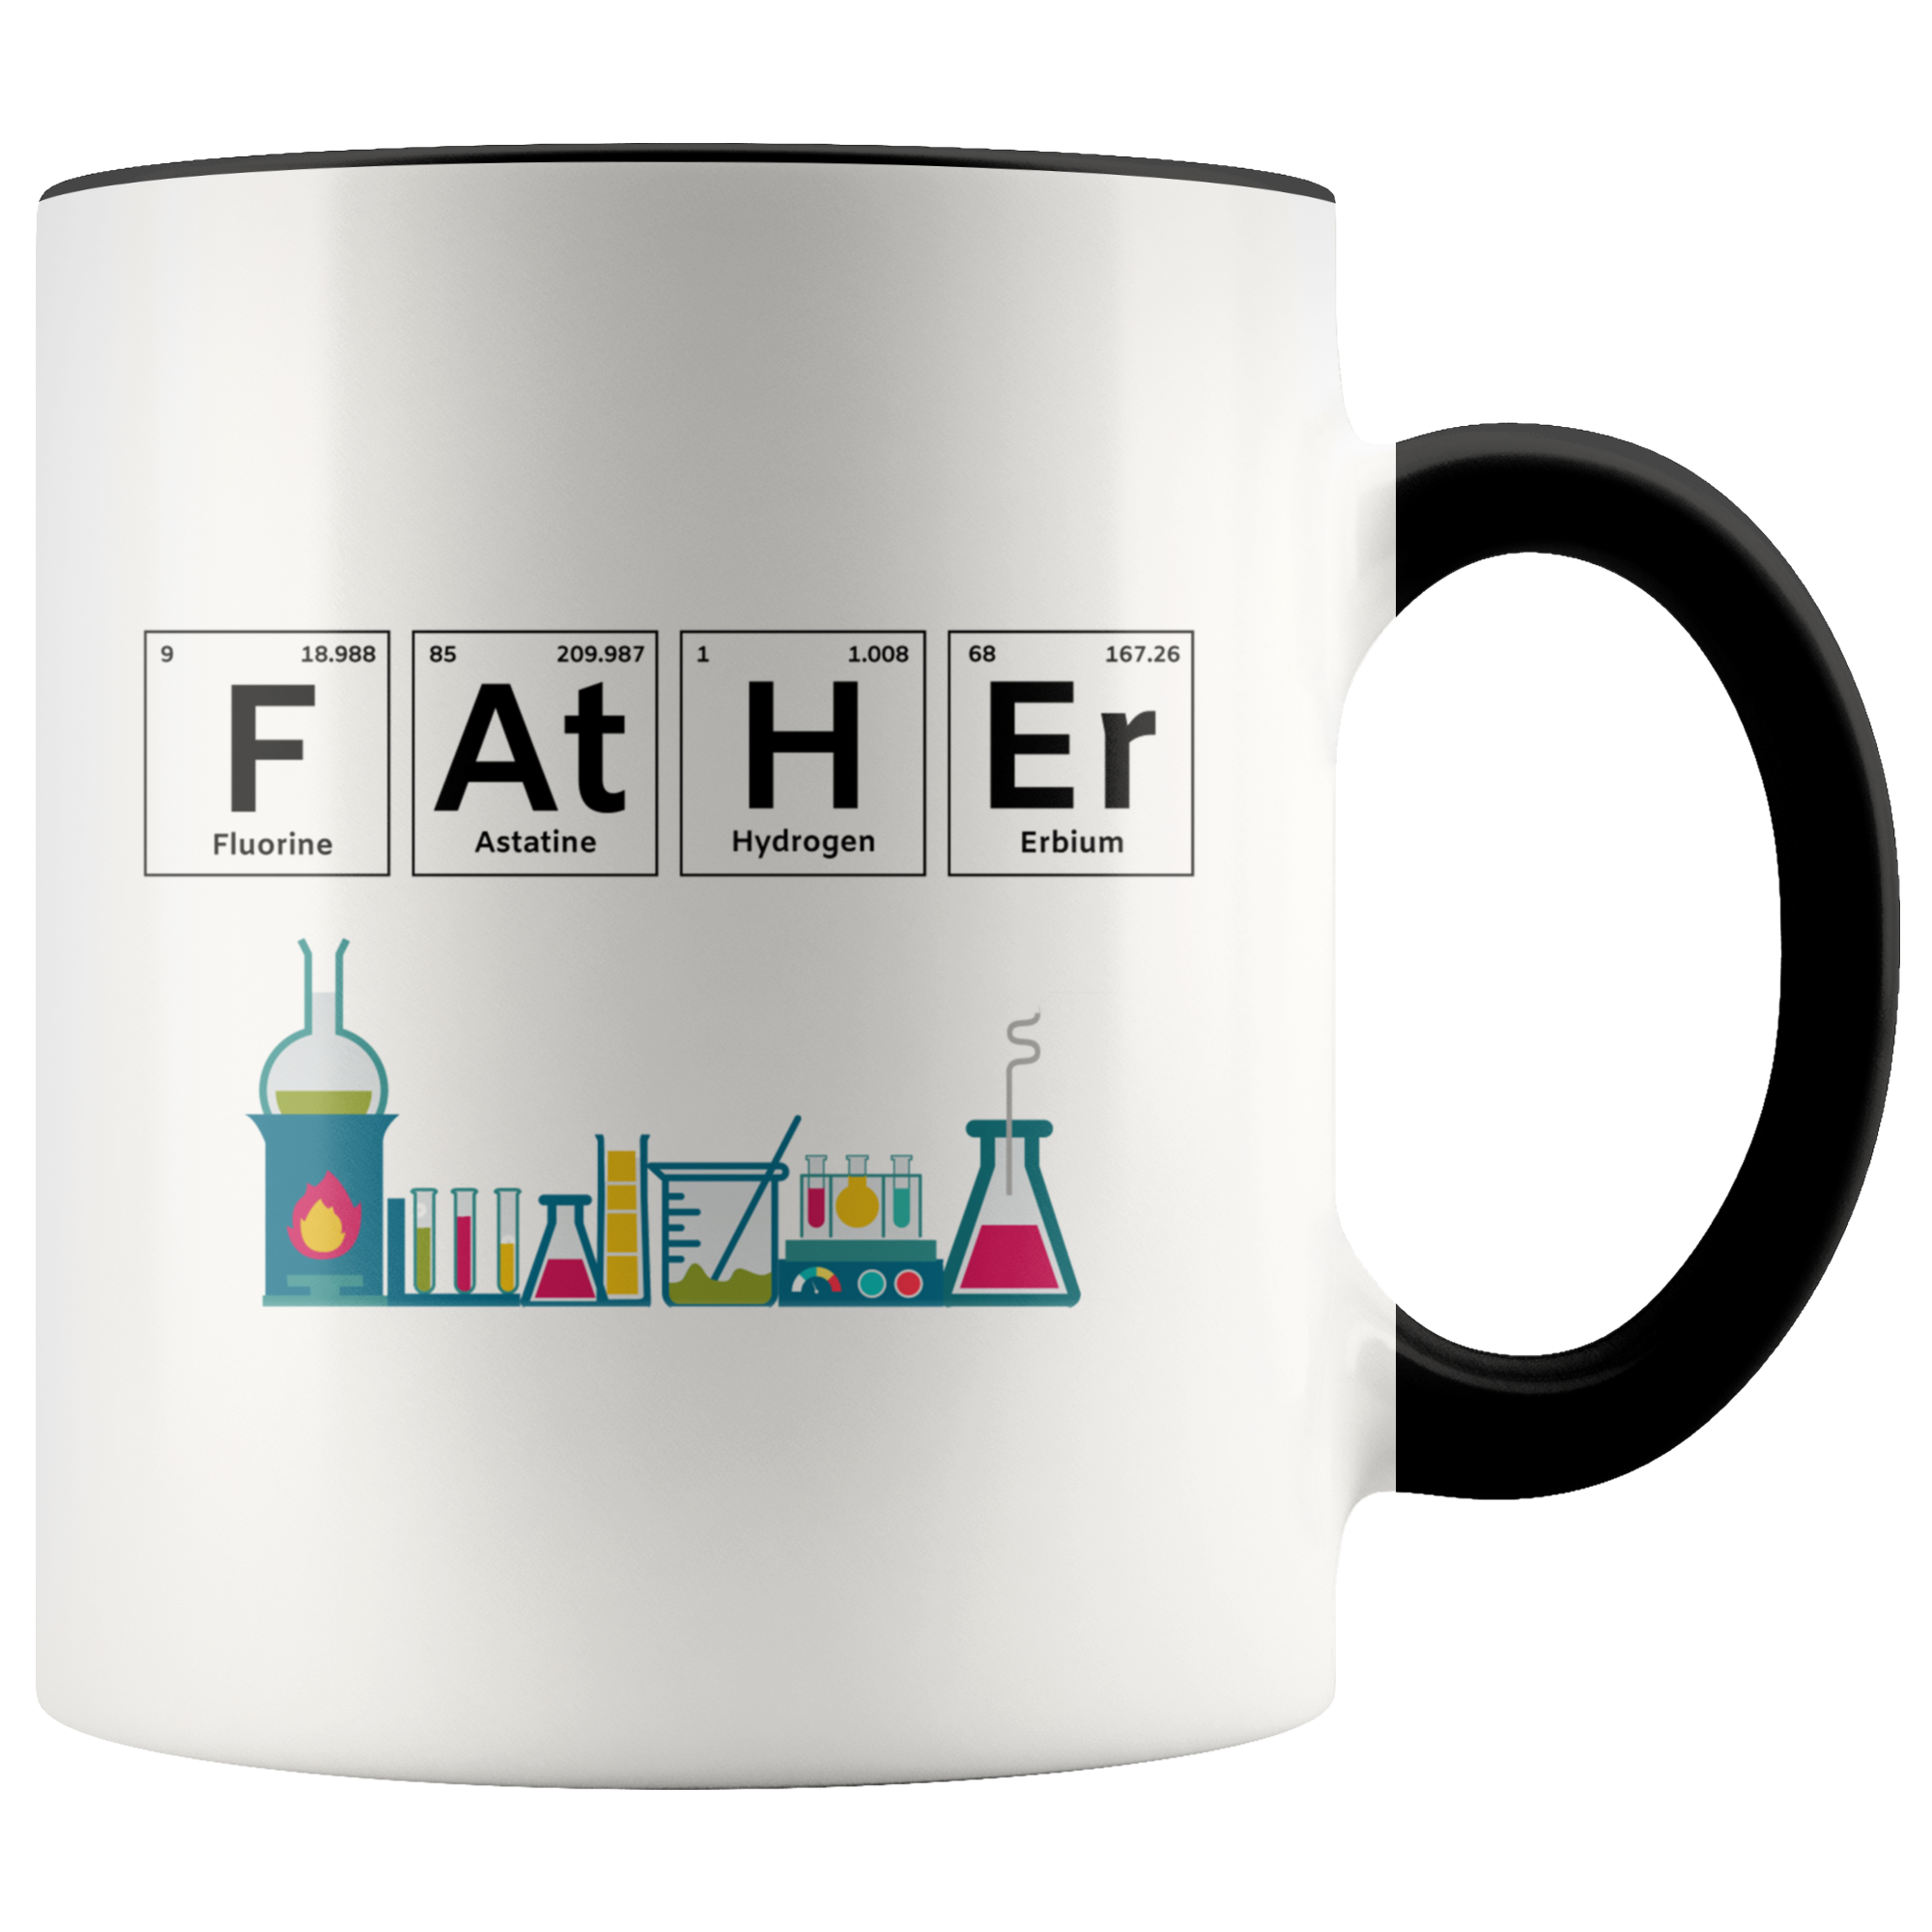 Father Chemistry Mug